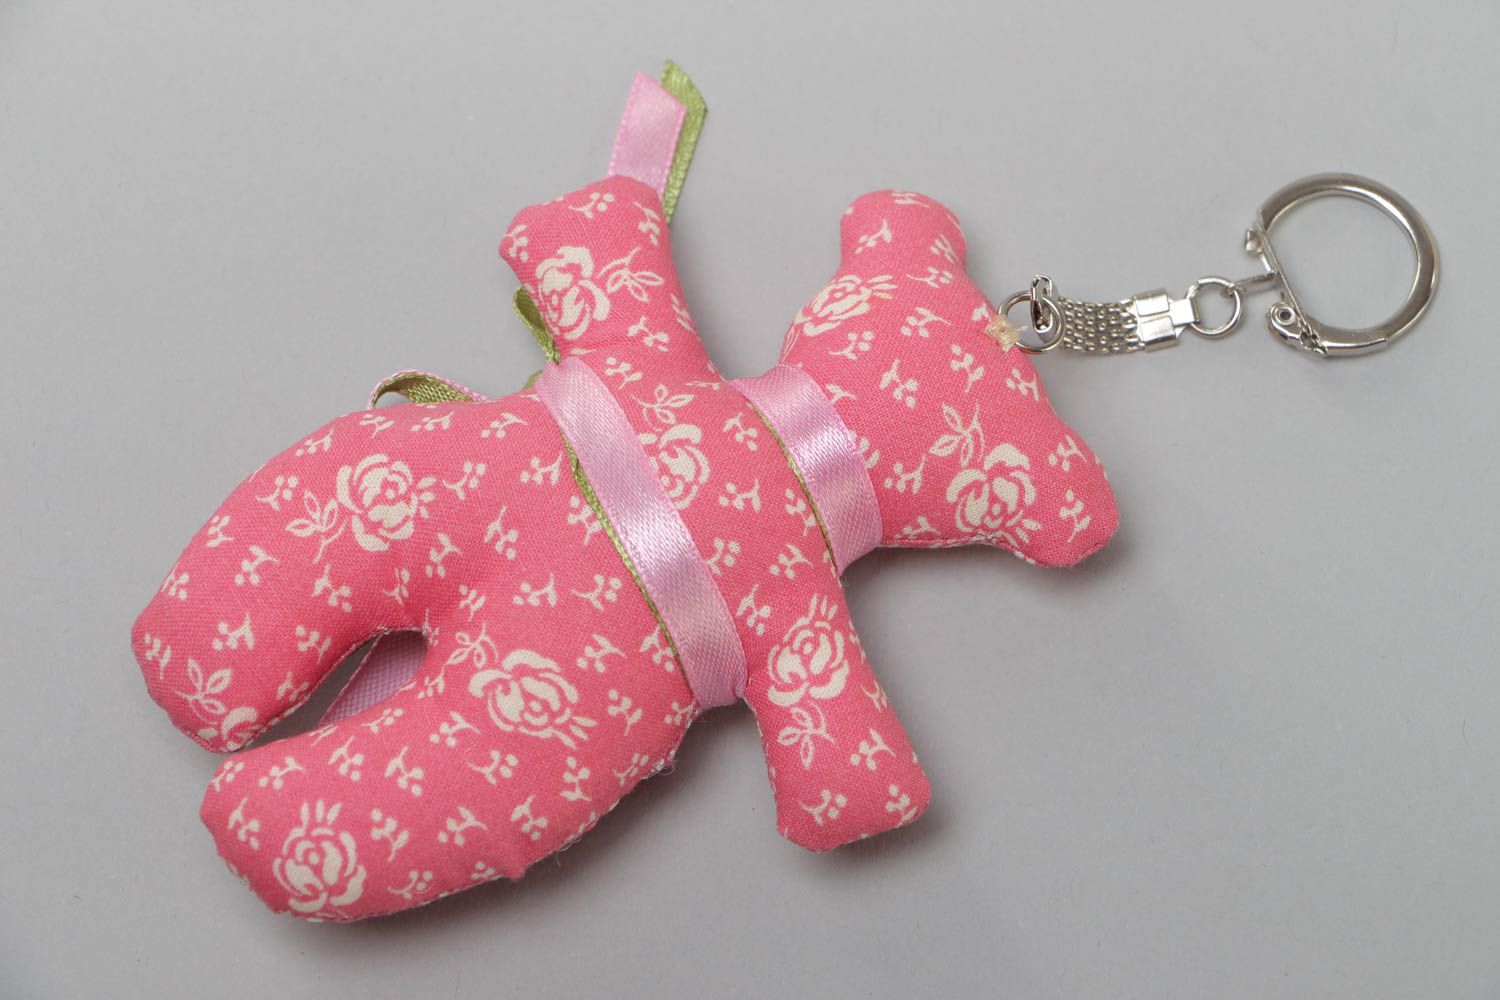 Handmade designer fabric soft keychain in the shape of pink bear photo 4